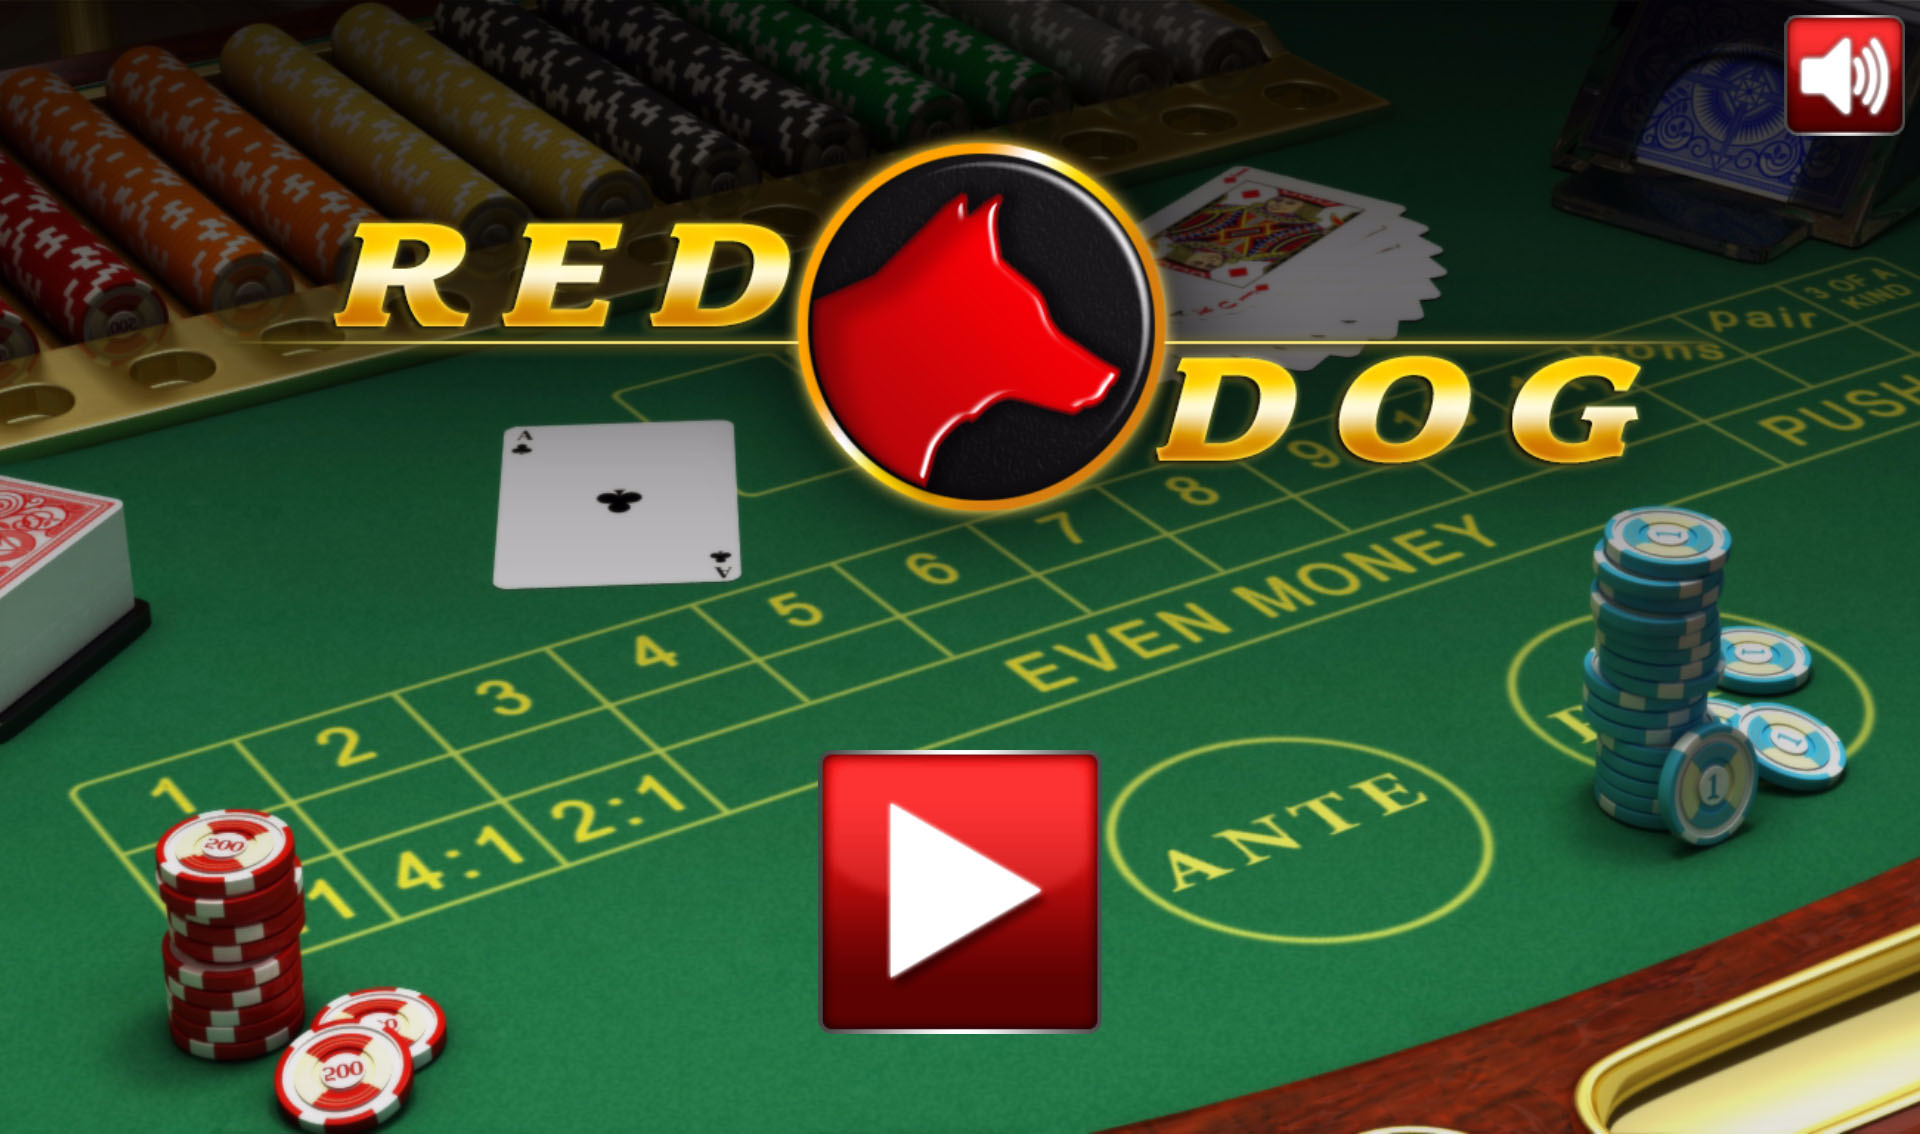 red dog casino mobile app